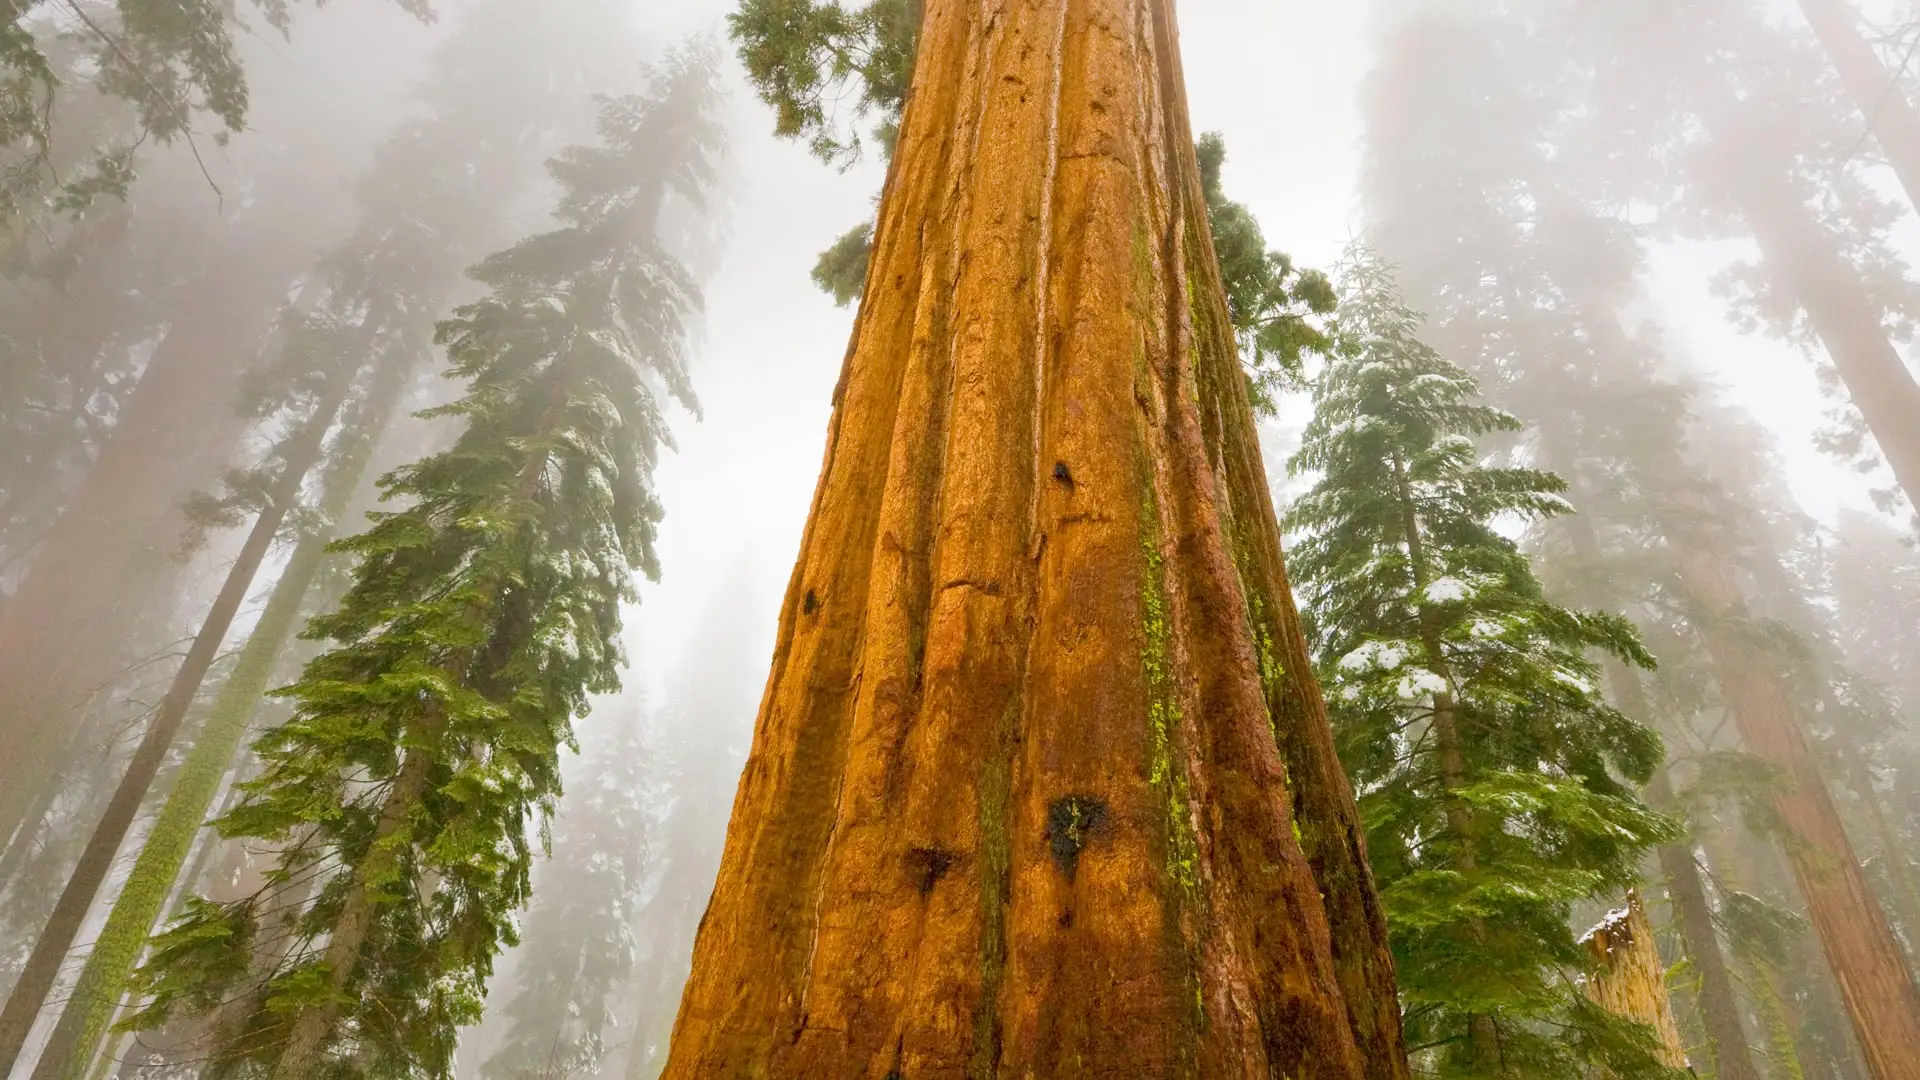 GiantSequoia_EN-AU11110971924_1920x1080.png